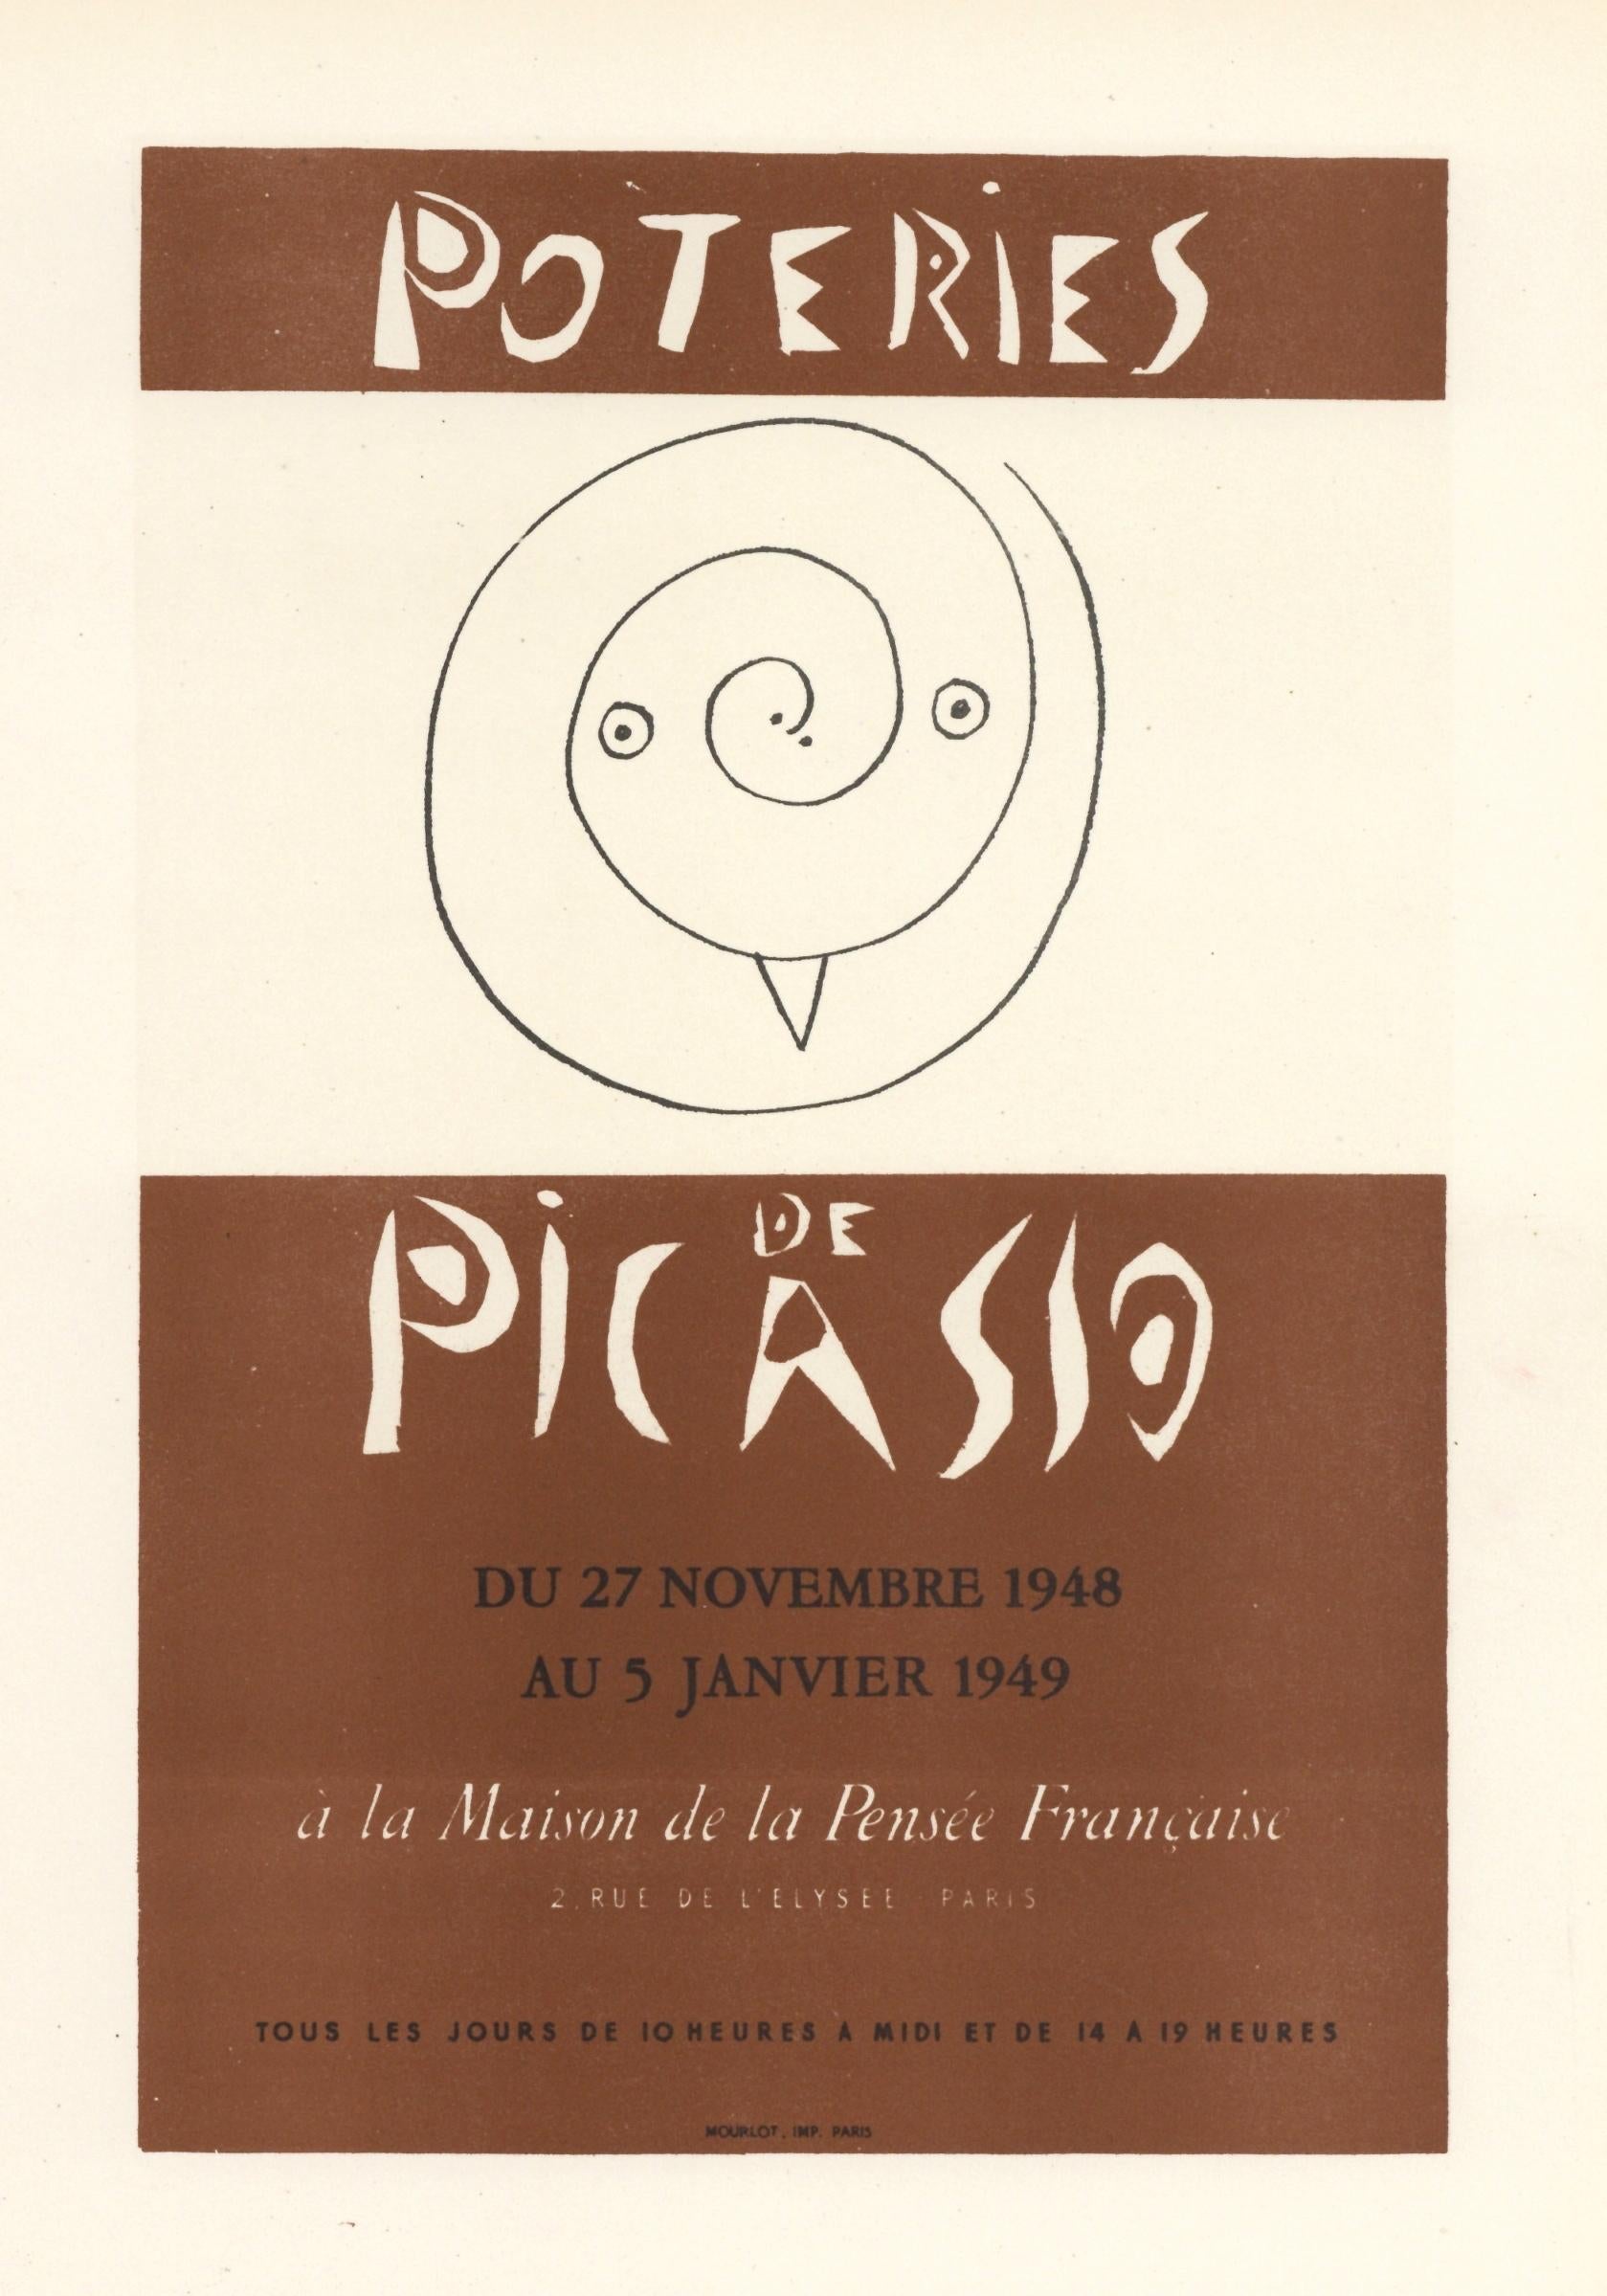 Did Picasso make prints?